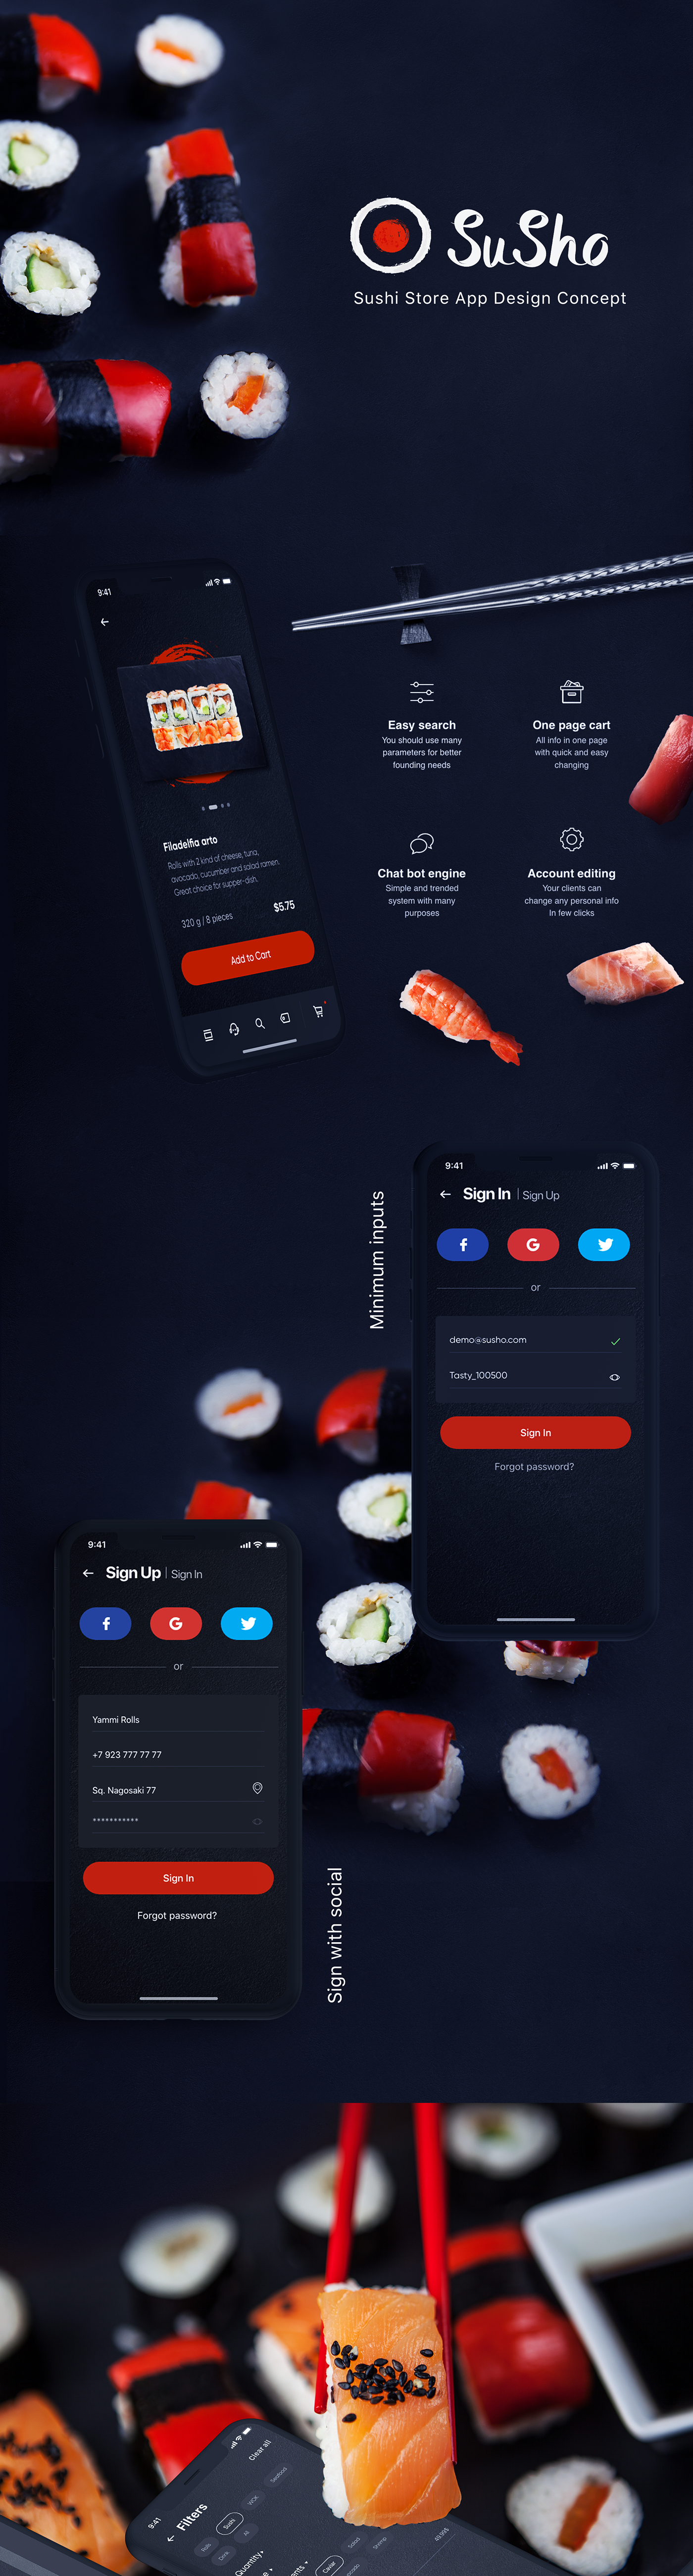 Sushi shop app design rolls culture minimum function application red